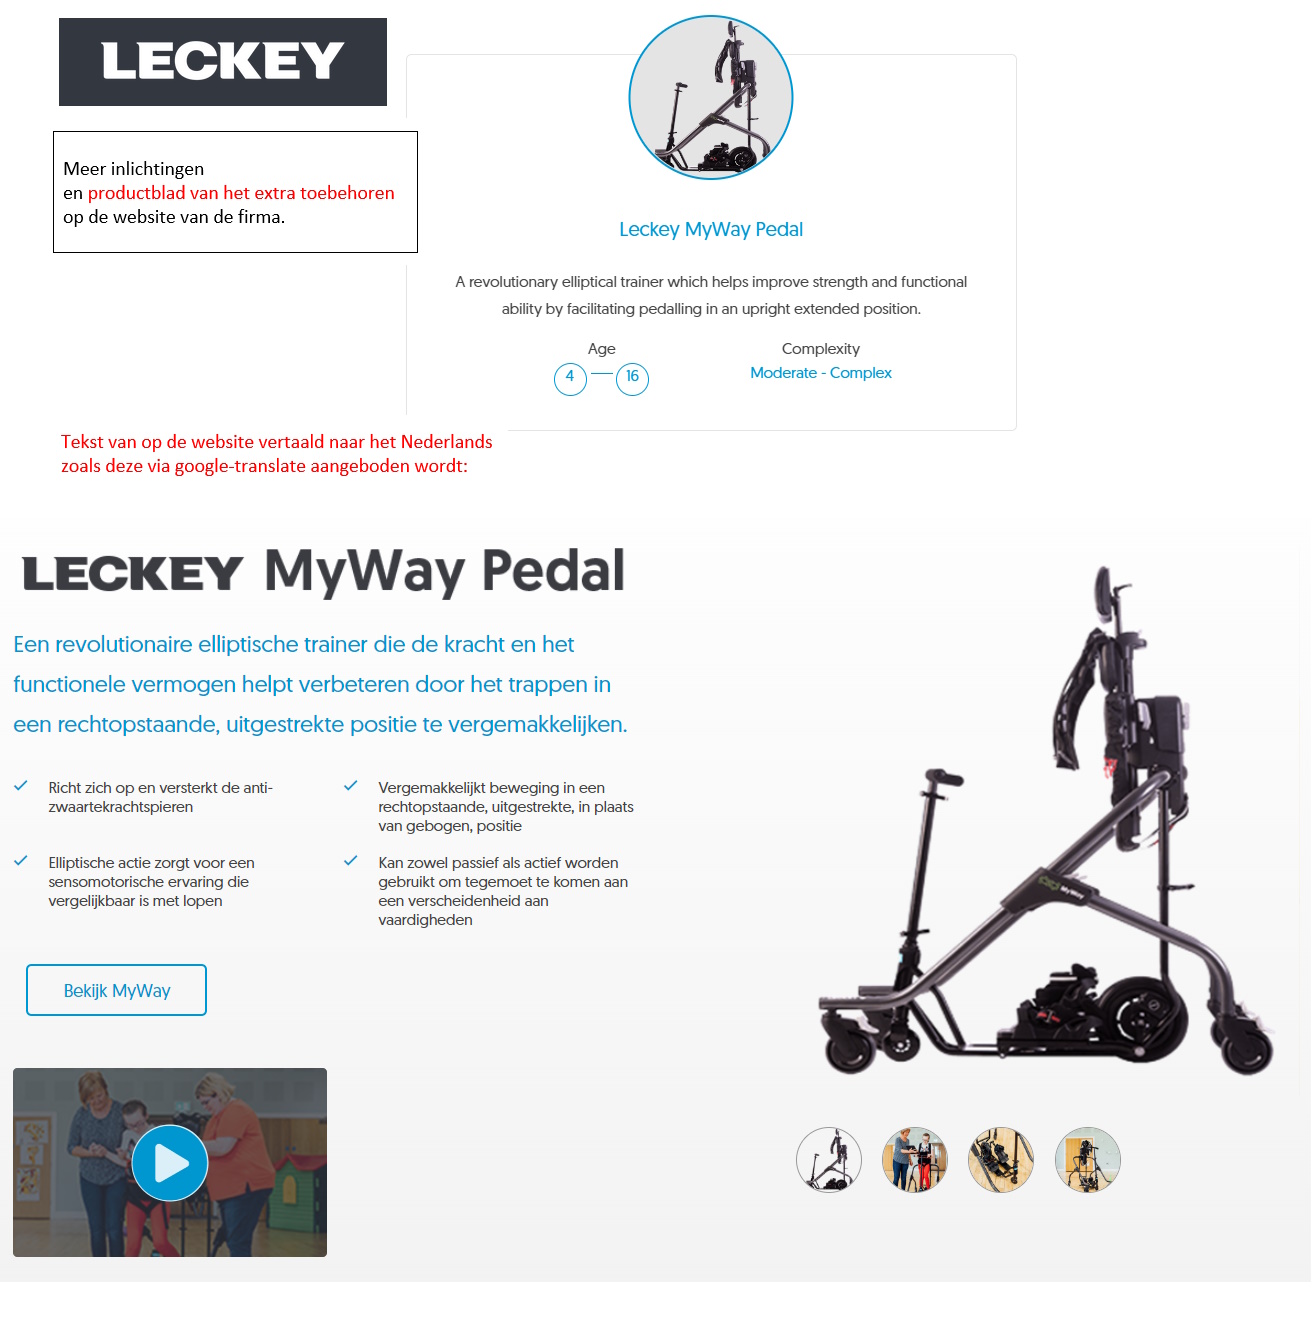 toegevoegd document 3 van Leckey MyWay Pedal  